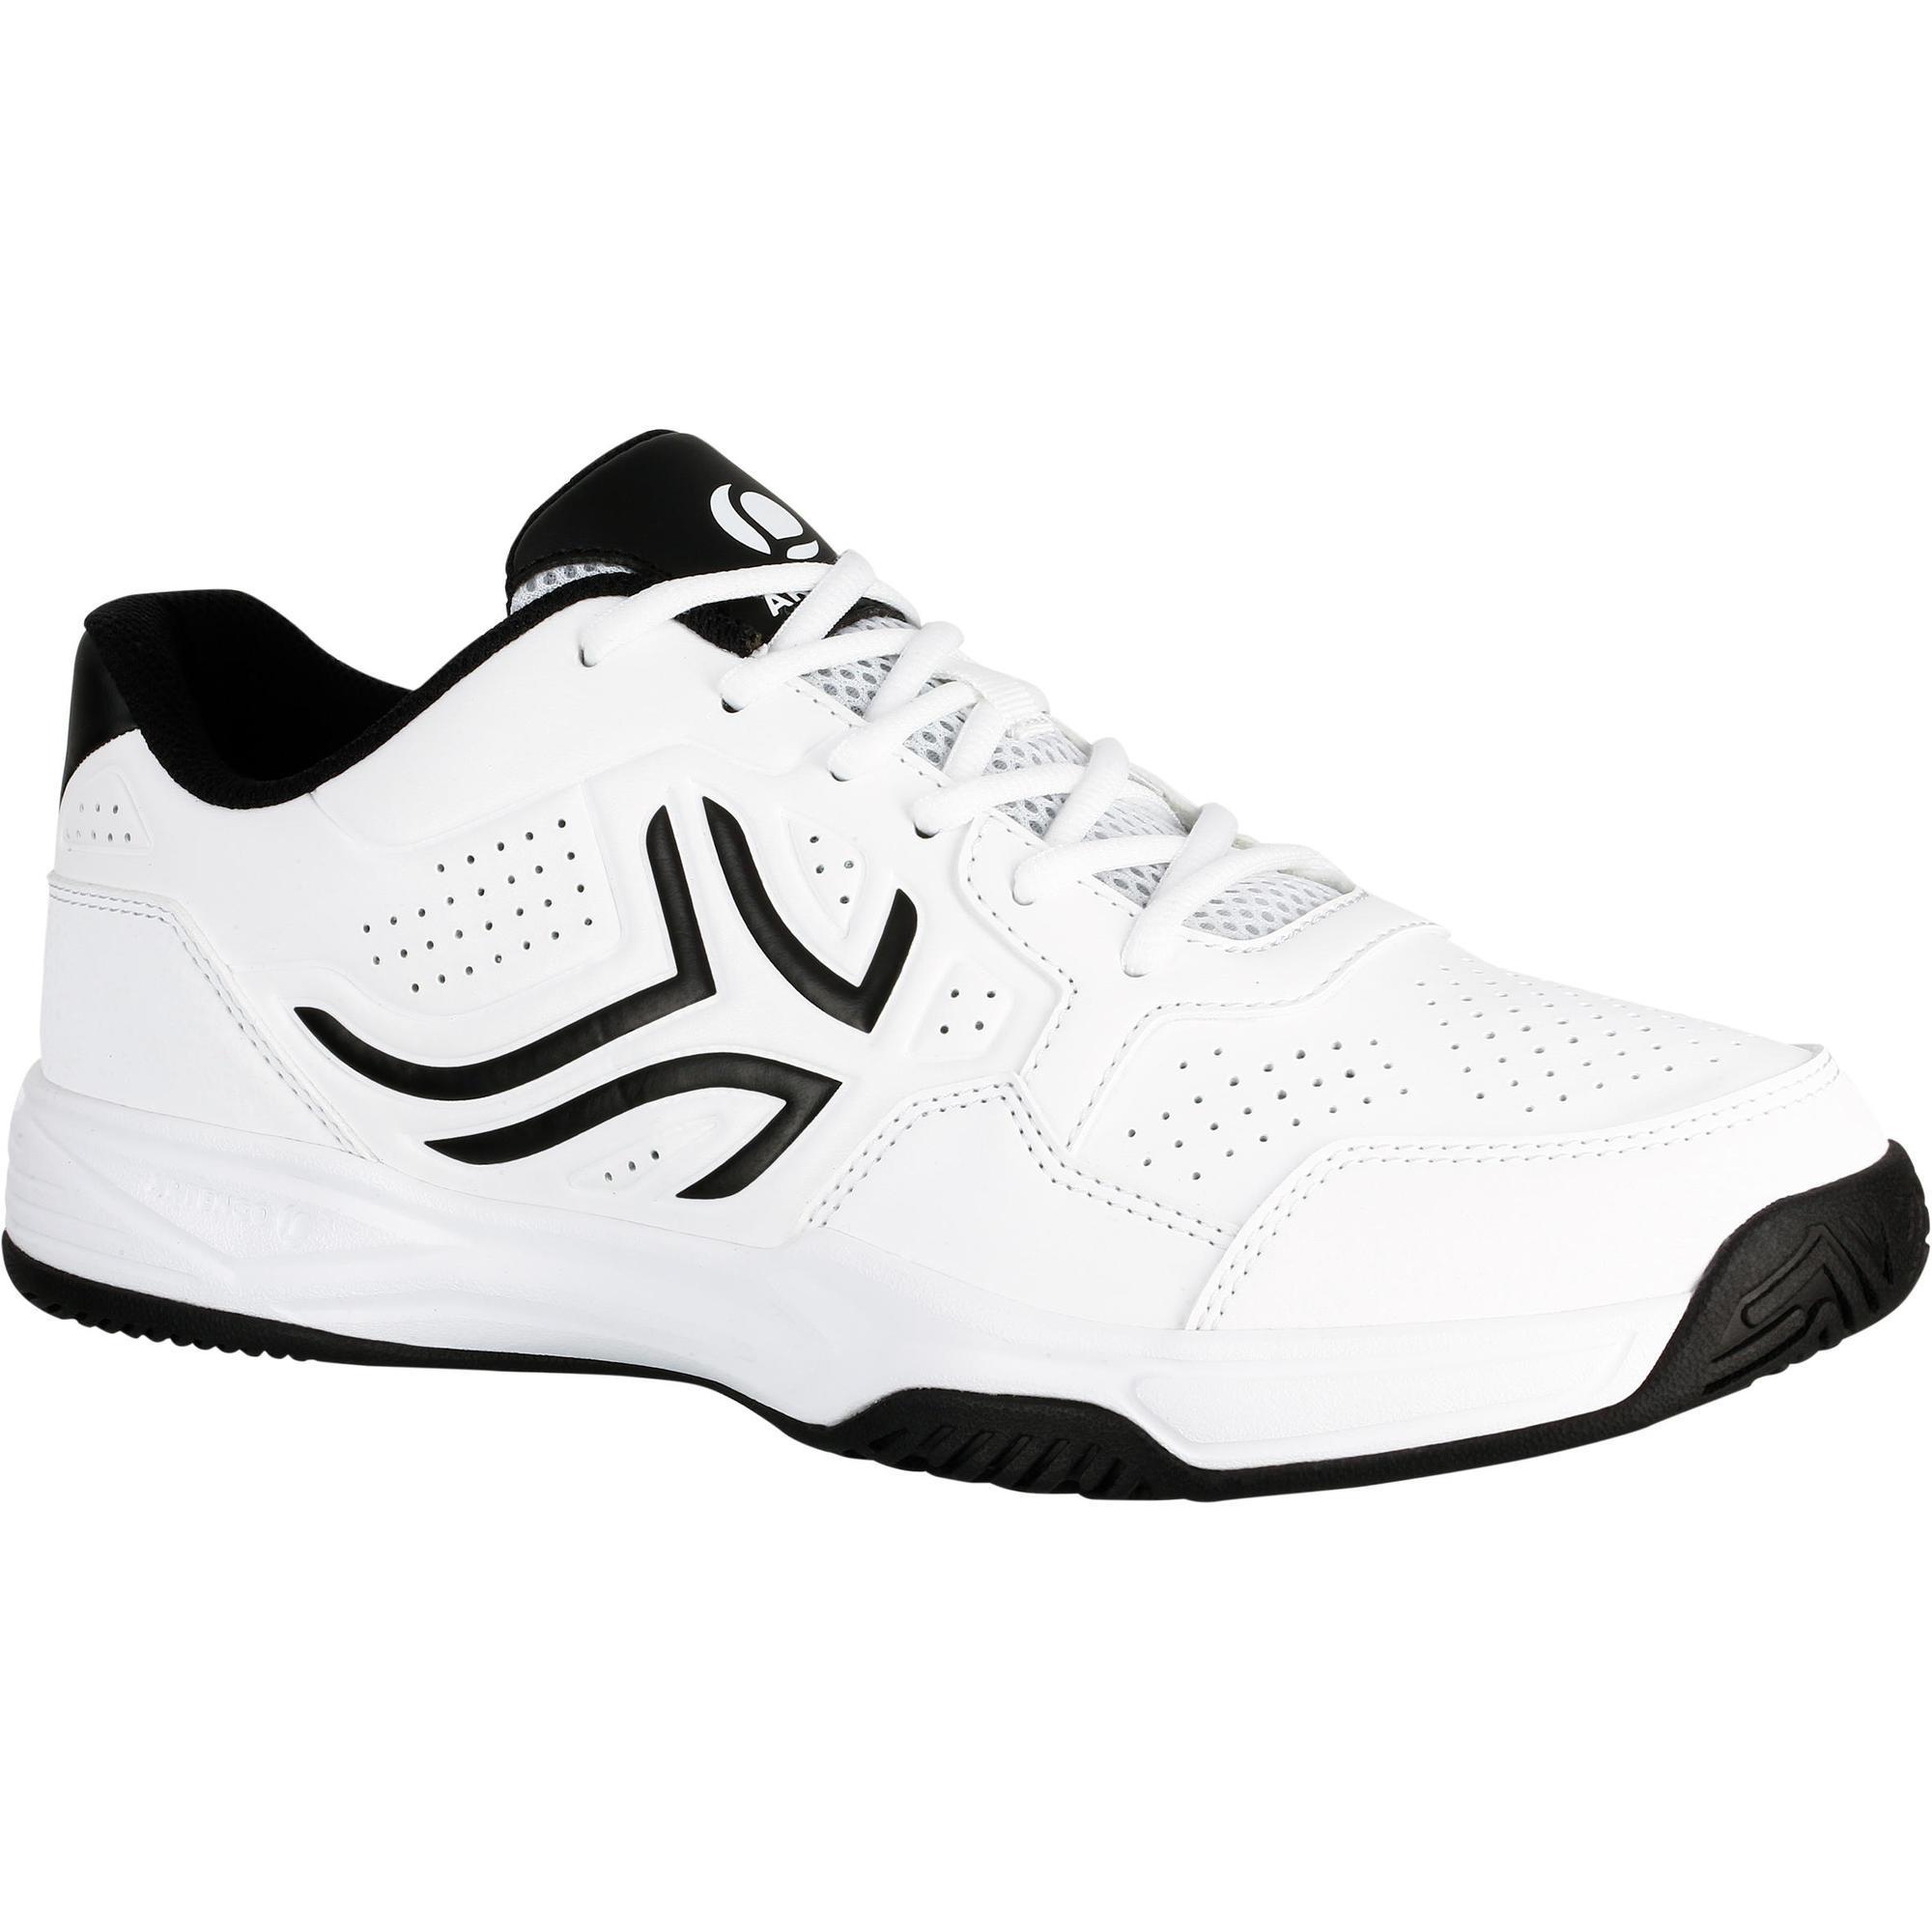 TS190M Tennis Shoes - White | artengo